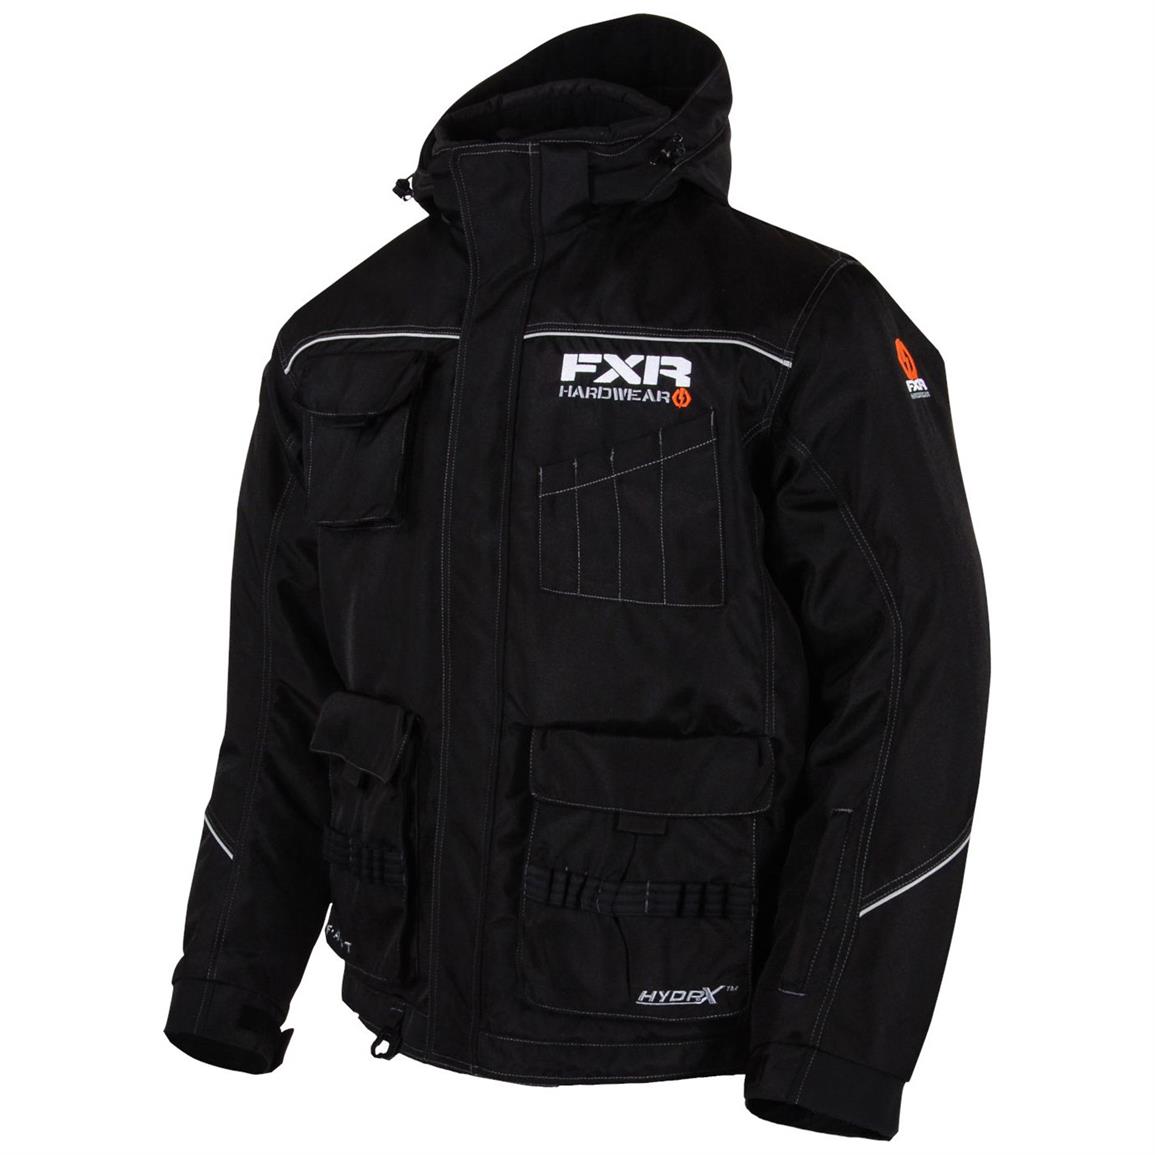 FXR Hardwear Jacket 627800, Snowmobile Clothing at Sportsman's Guide